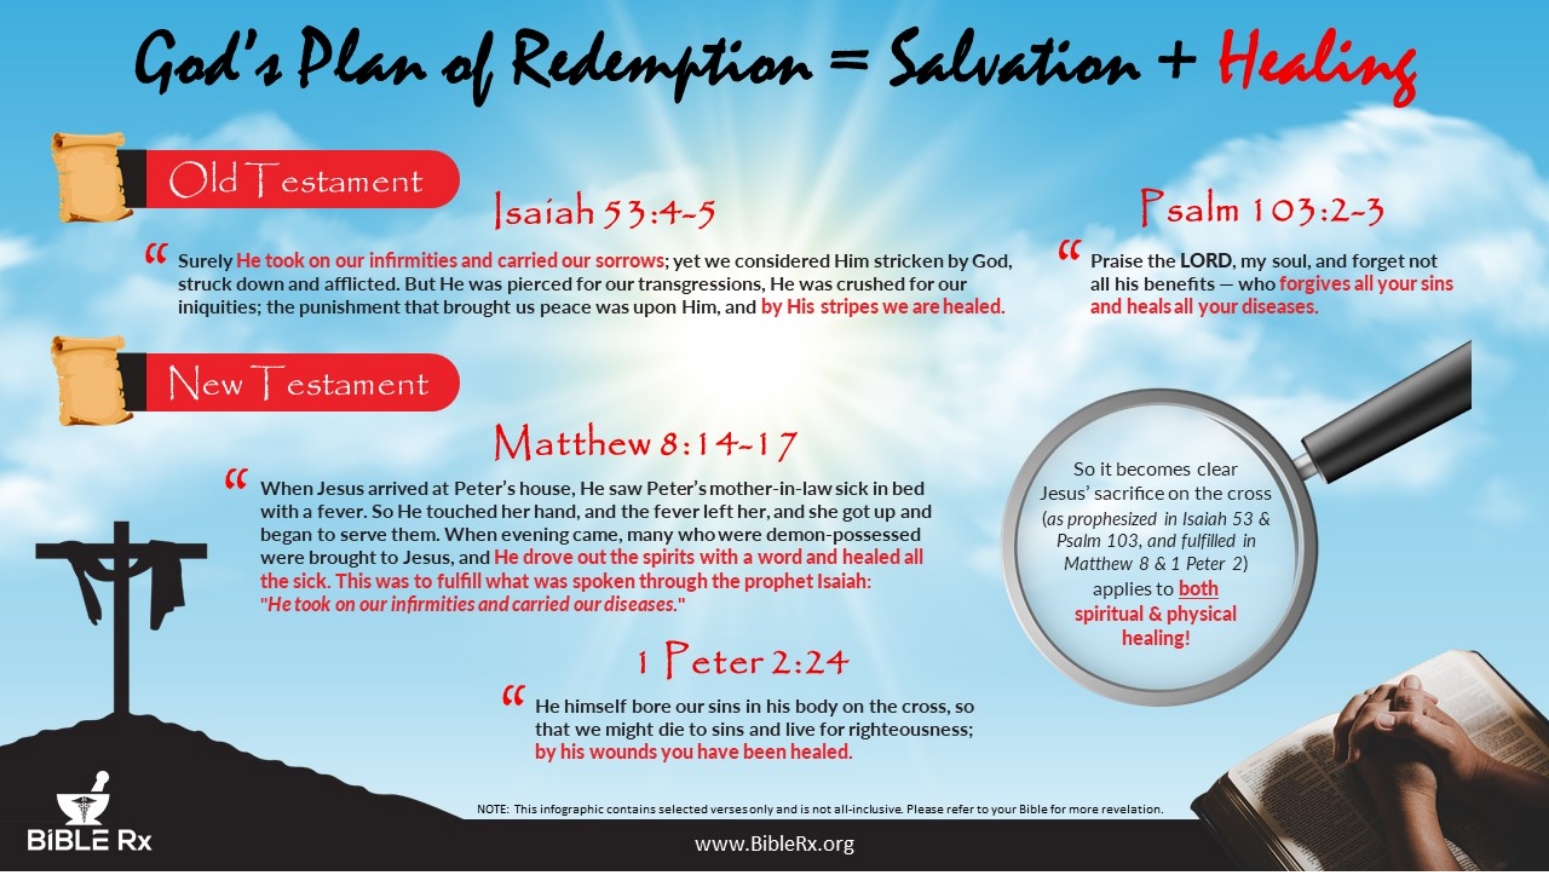 Gospel includes Salvation and Healing